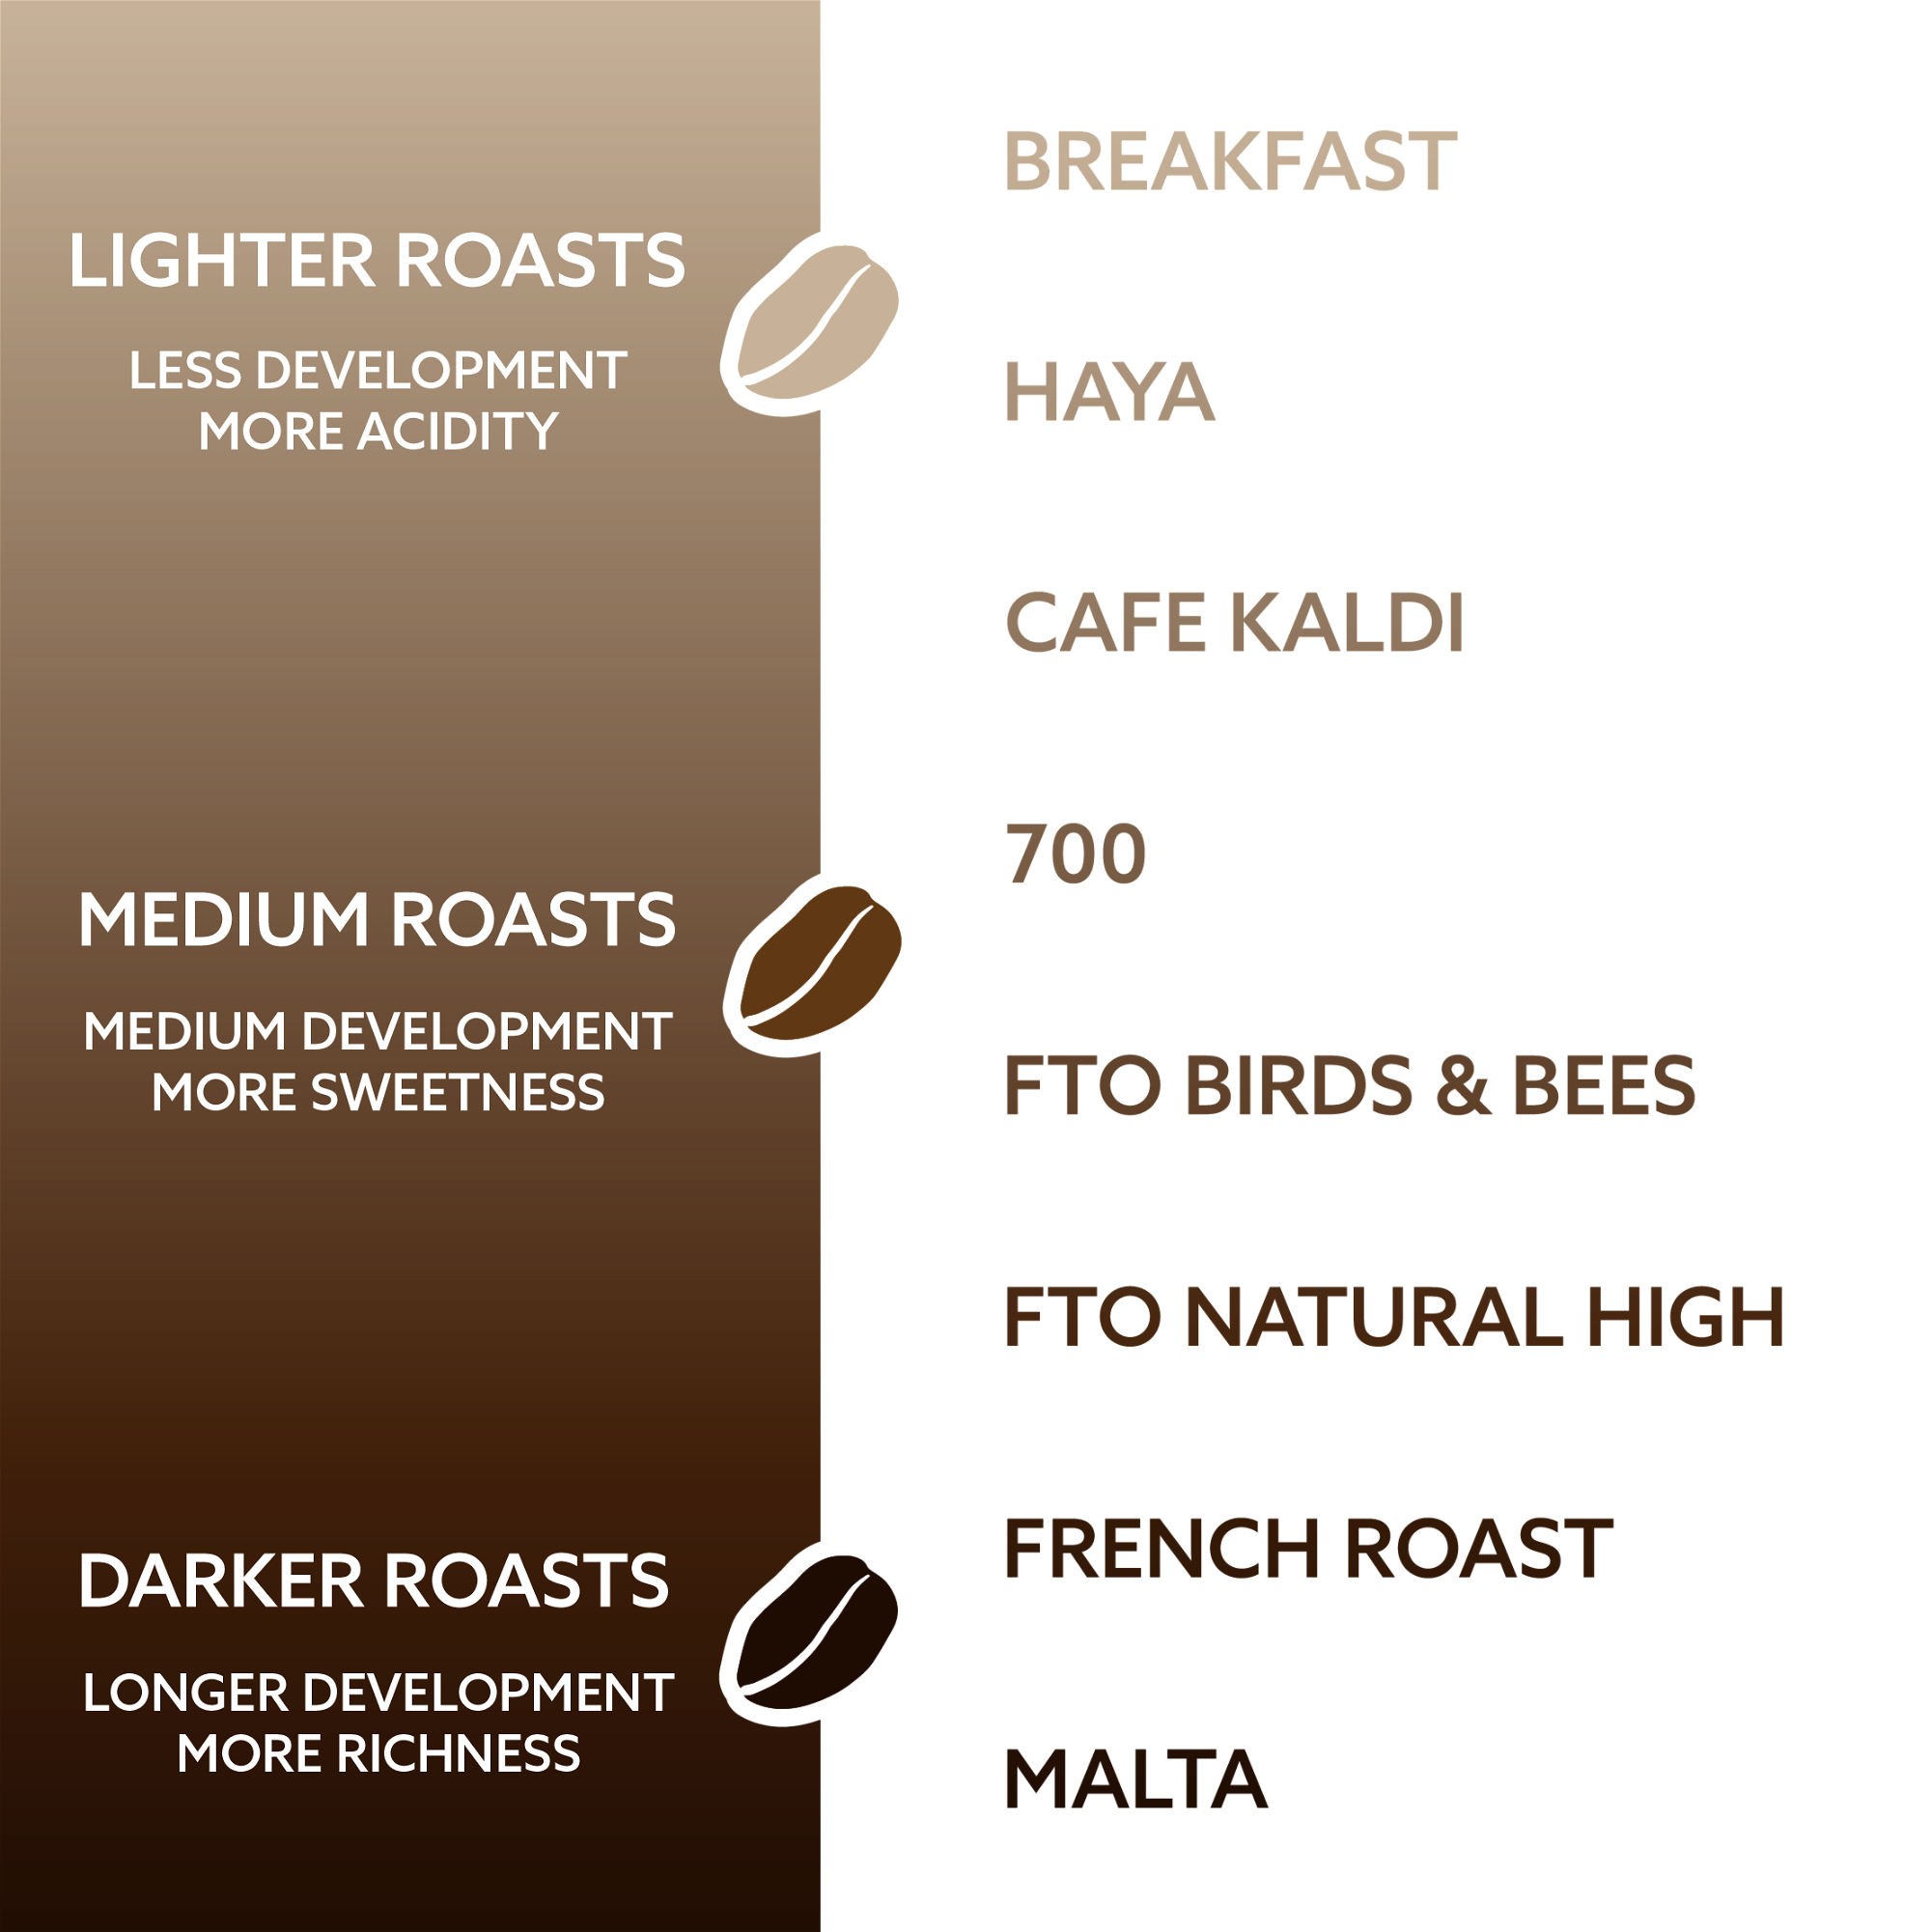 Lighter Roasts: Breakfast, Haya - Medium Roasts: Cafe Kaldi, 700, FTO Birds & Bees - Darker Roasts: FTO Natural High, French Roast, Malta